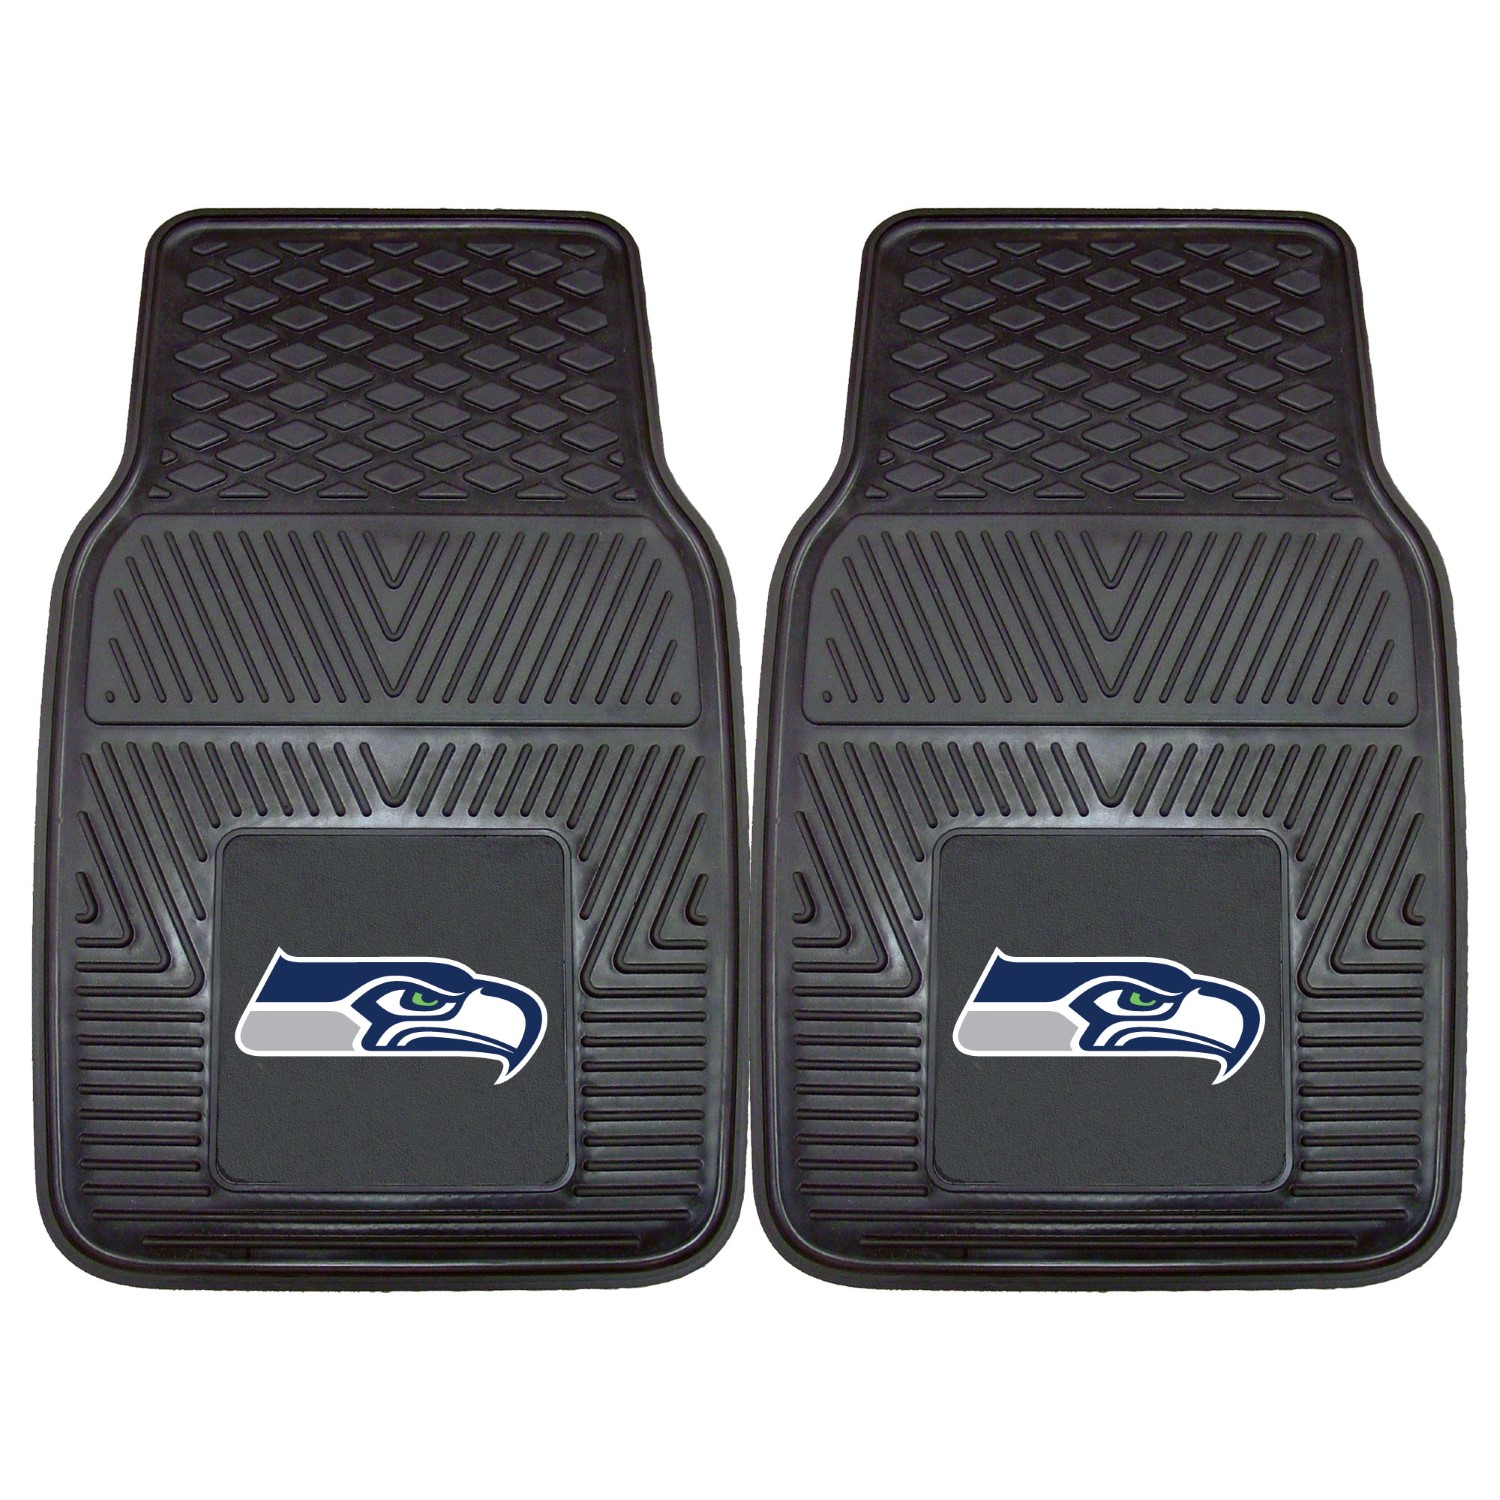 Fanmats 2 Piece Vinyl Car Mat Set NFL - Seattle Seahawks